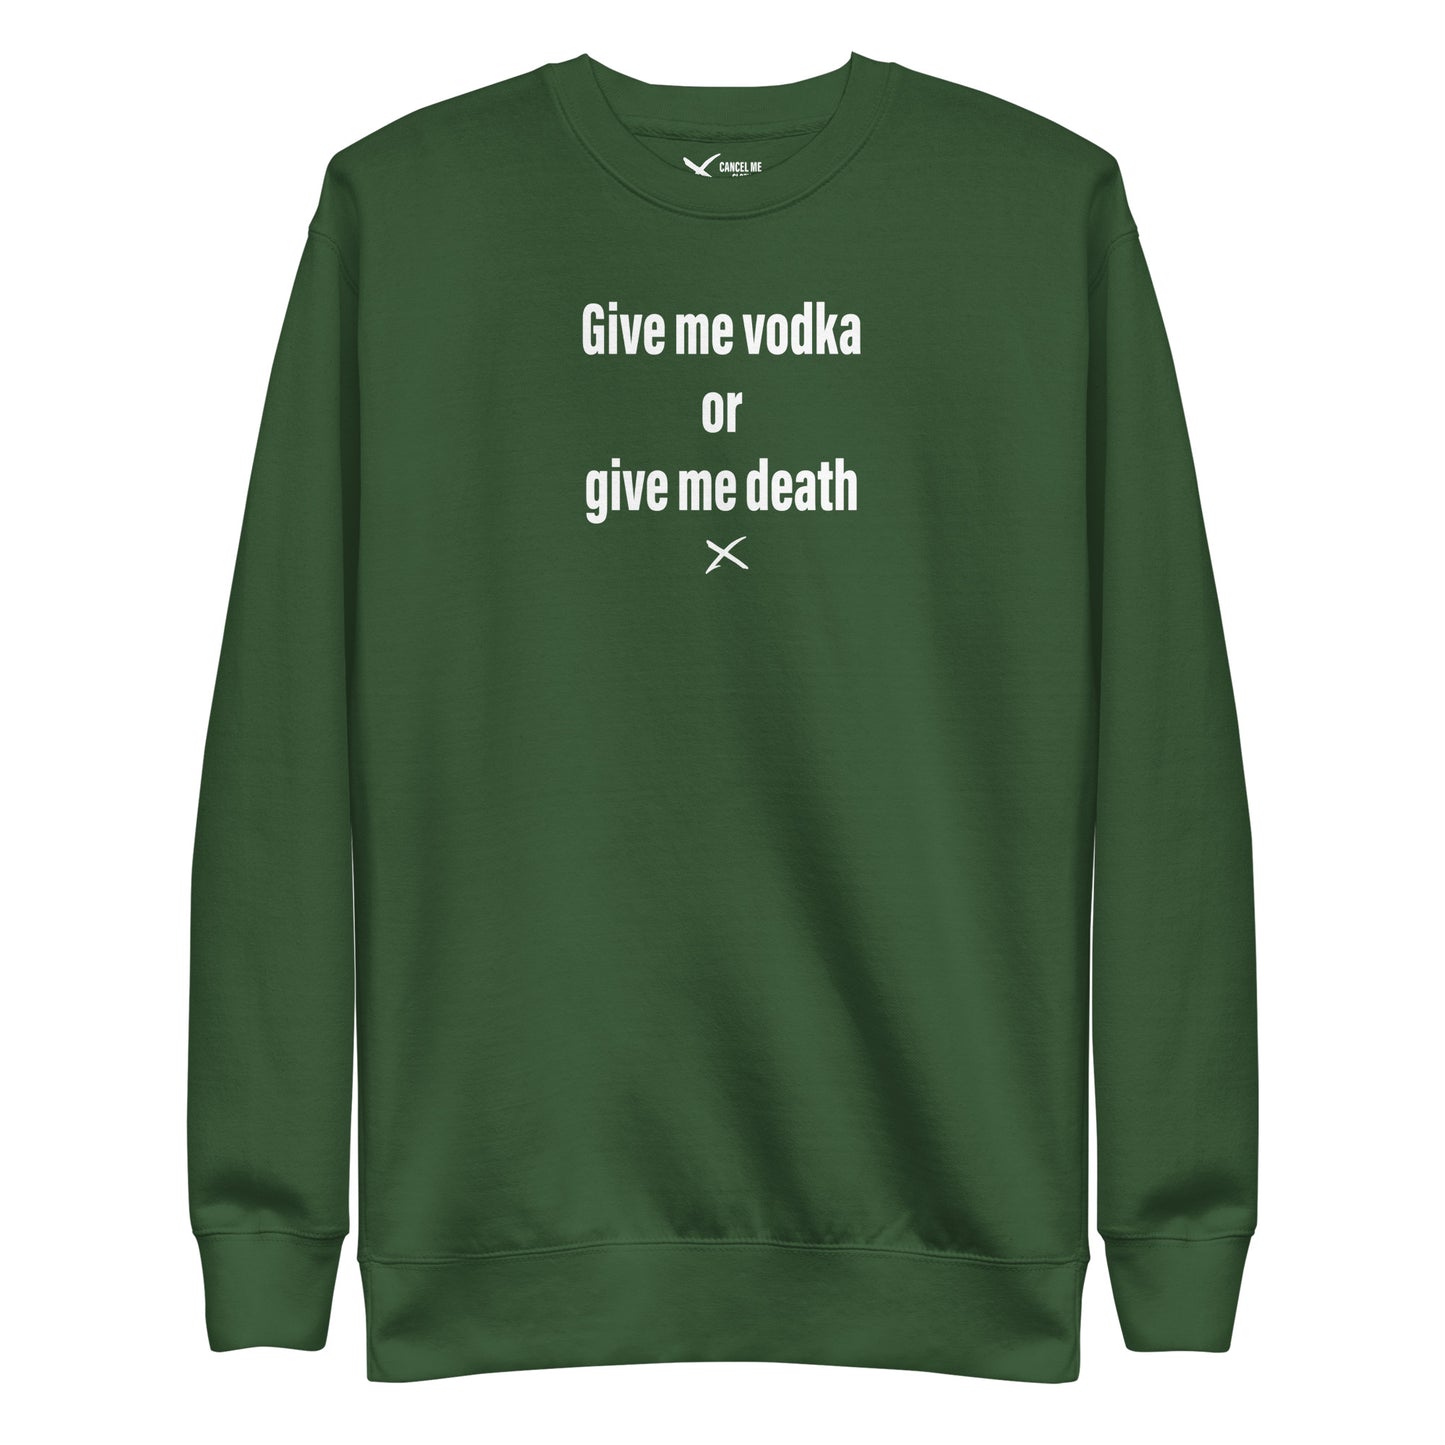 Give me vodka or give me death - Sweatshirt